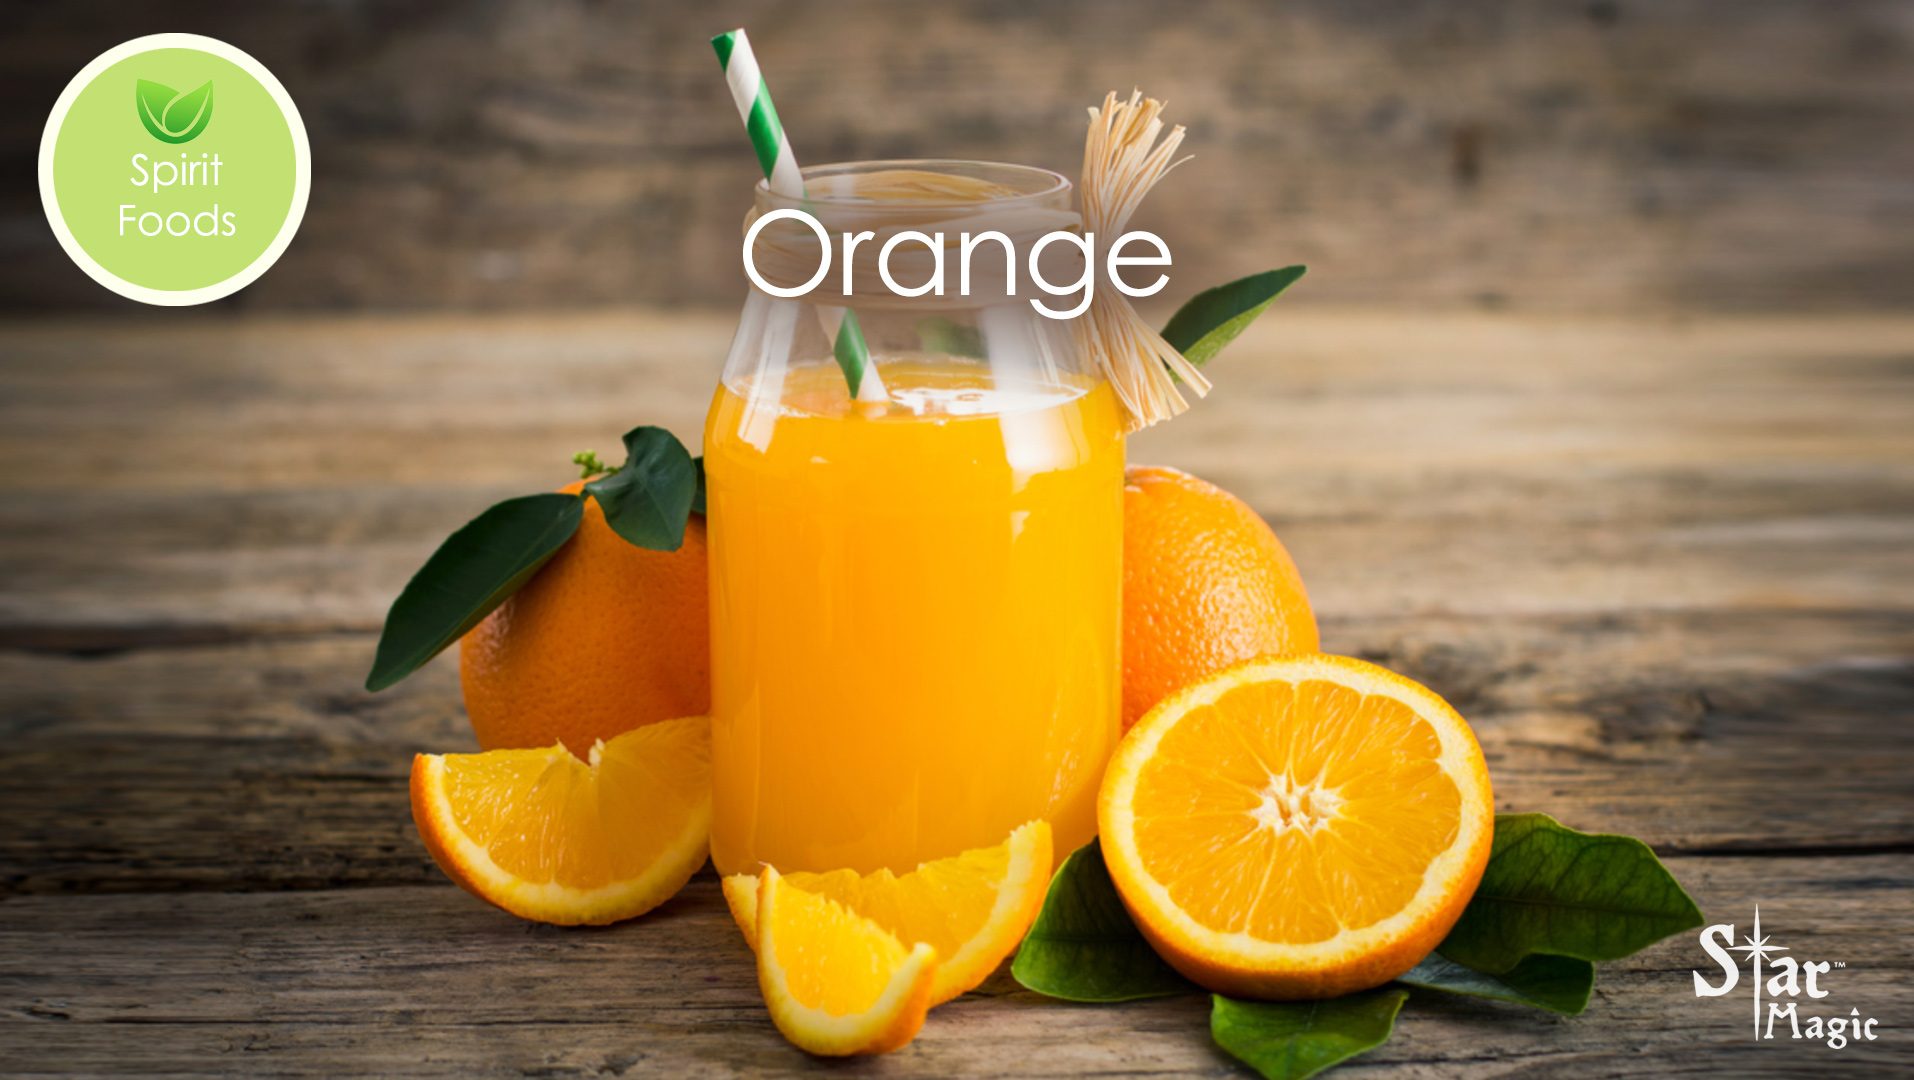 Spirit Food Orange